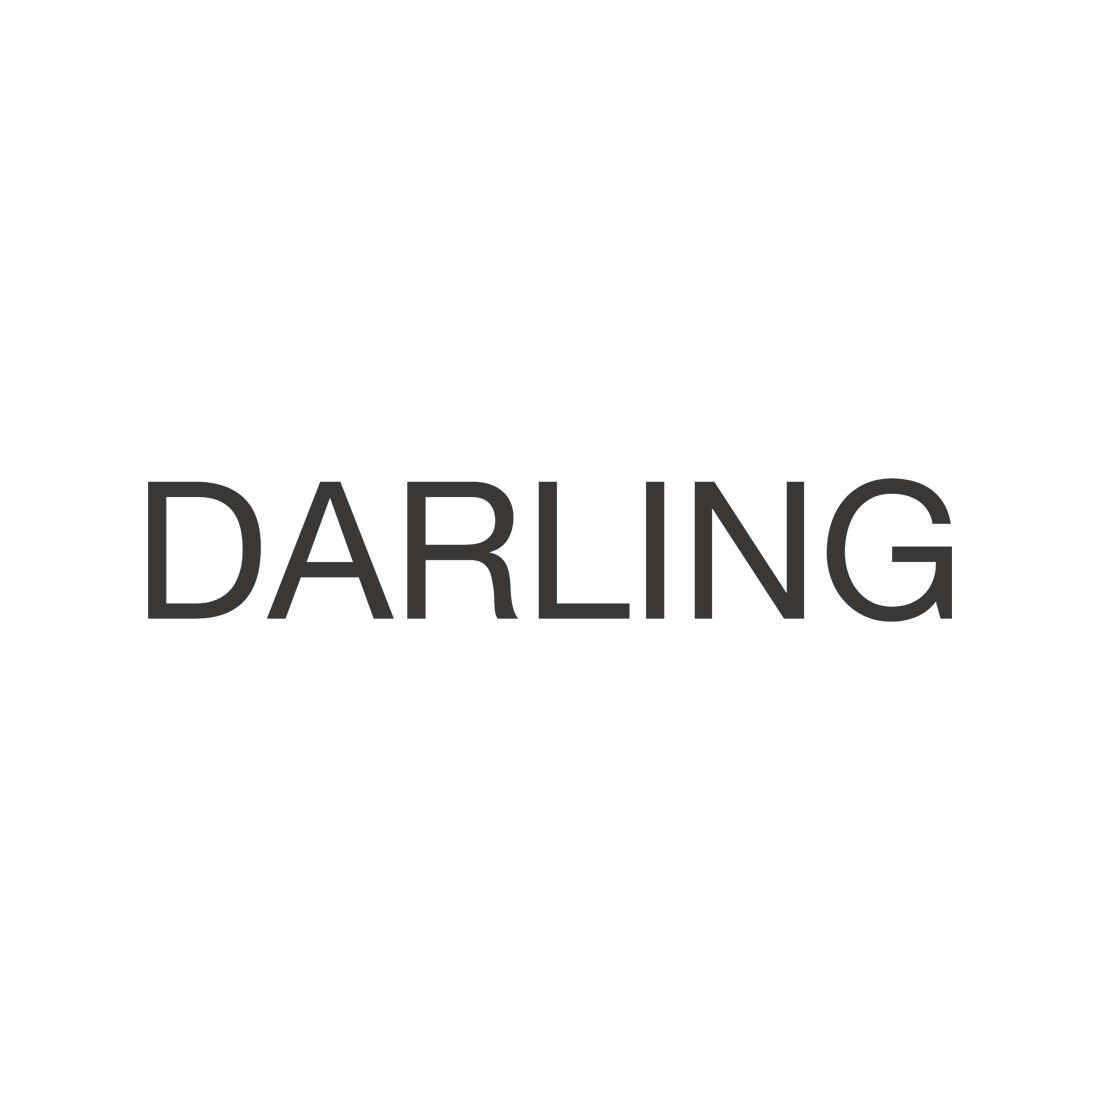 Darling logo